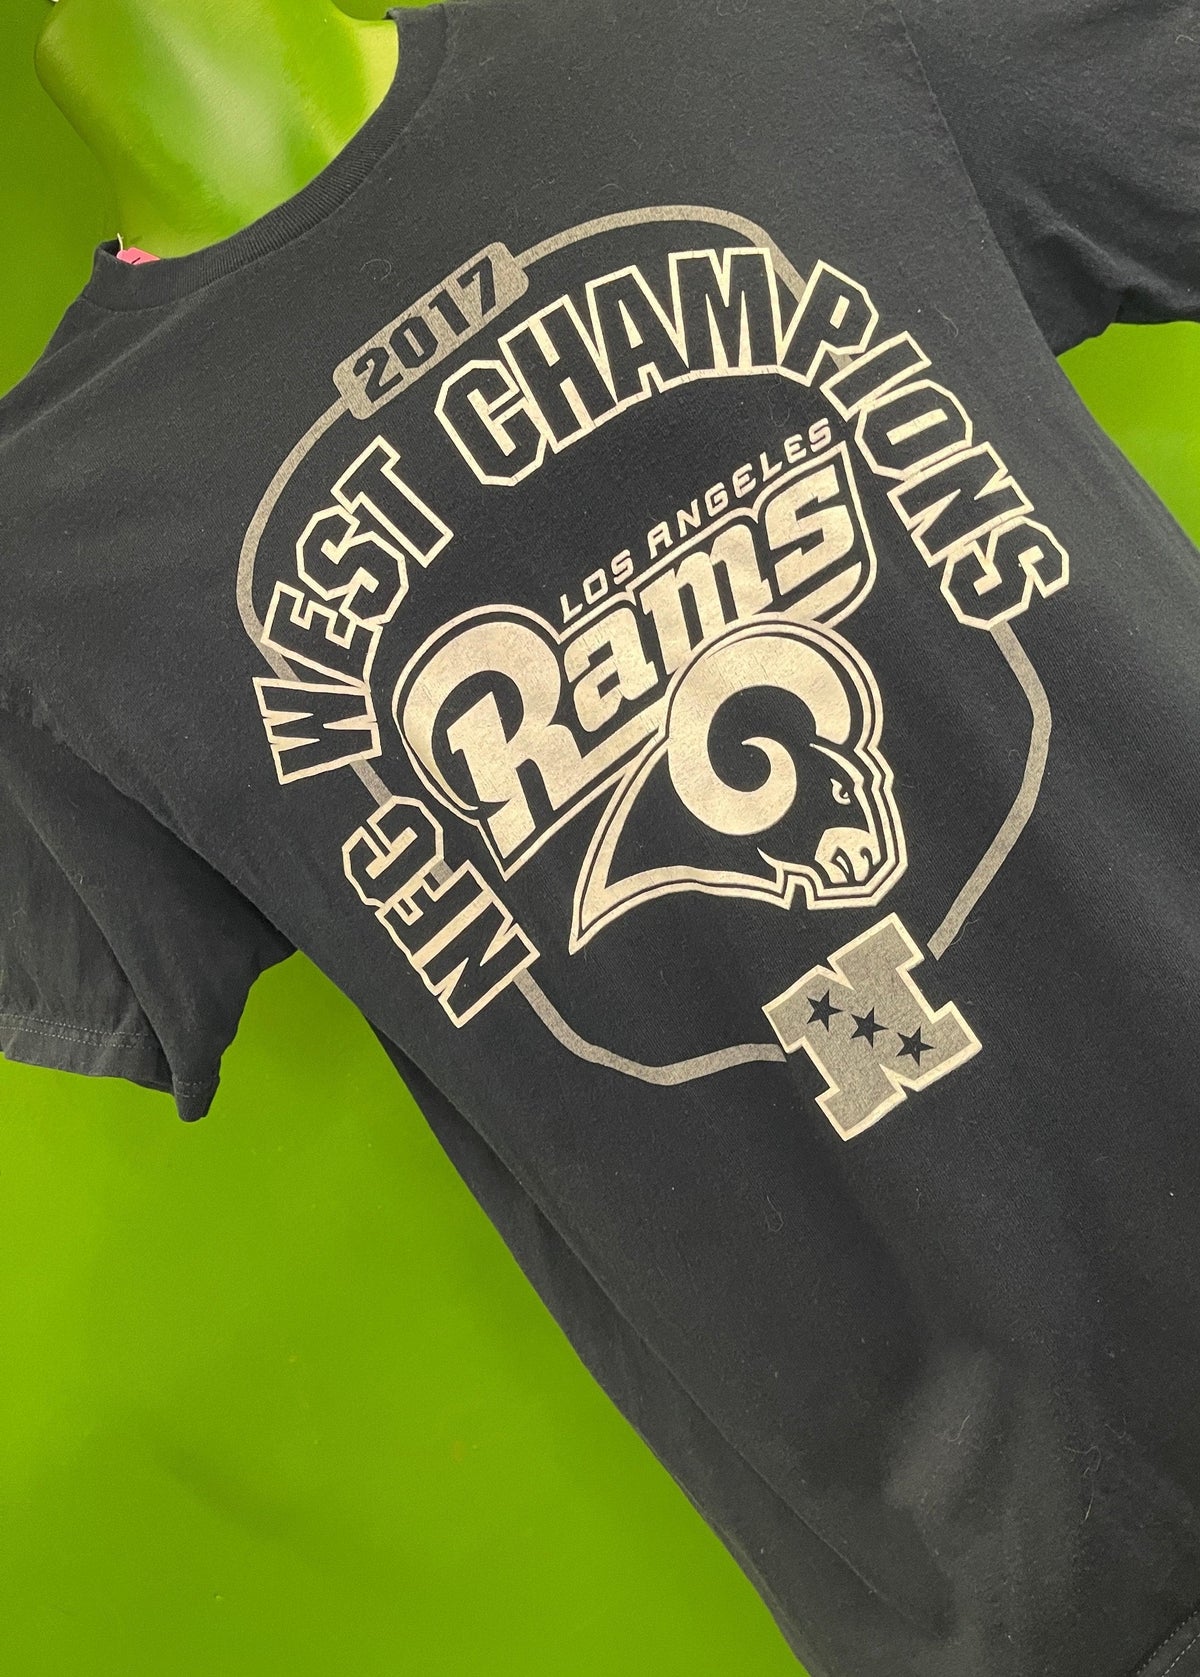 NFL Los Angeles Rams 2017 NFC West Champions T-Shirt Men's Medium